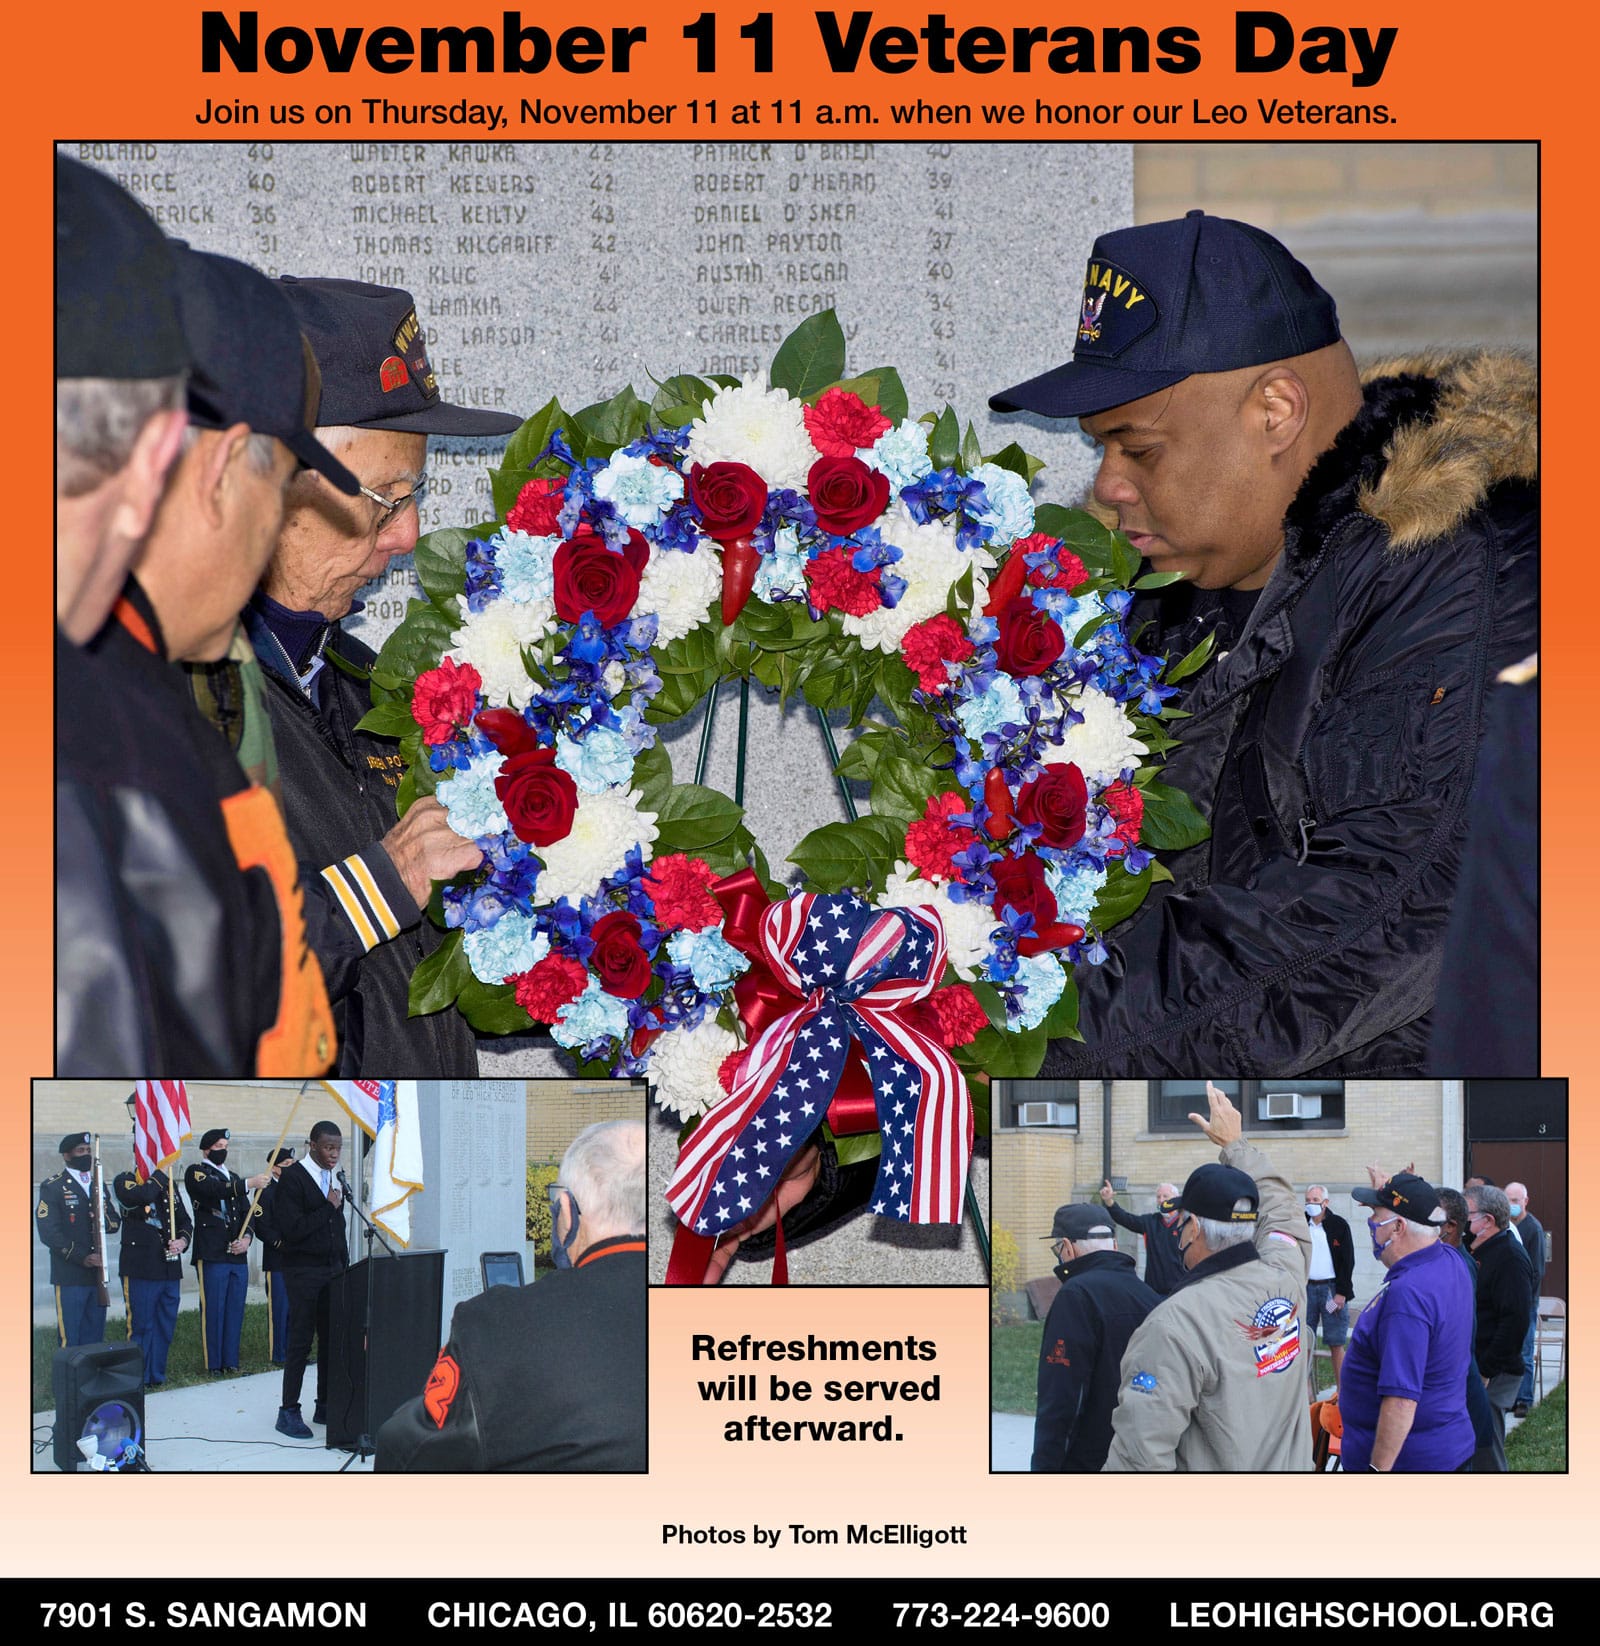 Leo Veterans Day Ceremony November 11 at 11am